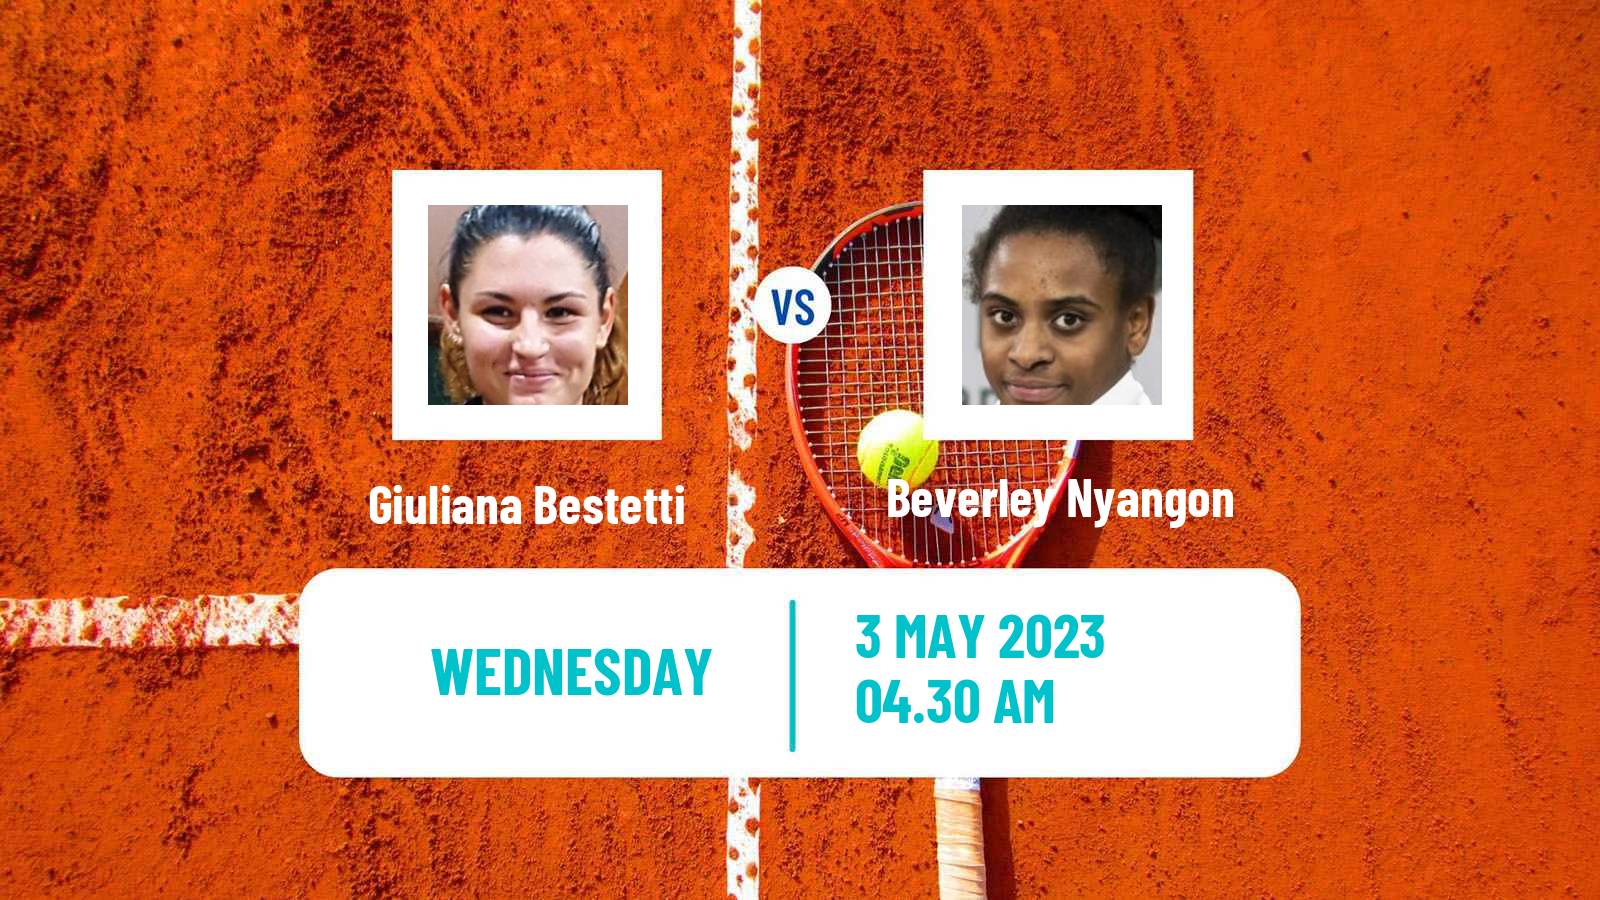 Tennis ITF Tournaments Giuliana Bestetti - Beverley Nyangon